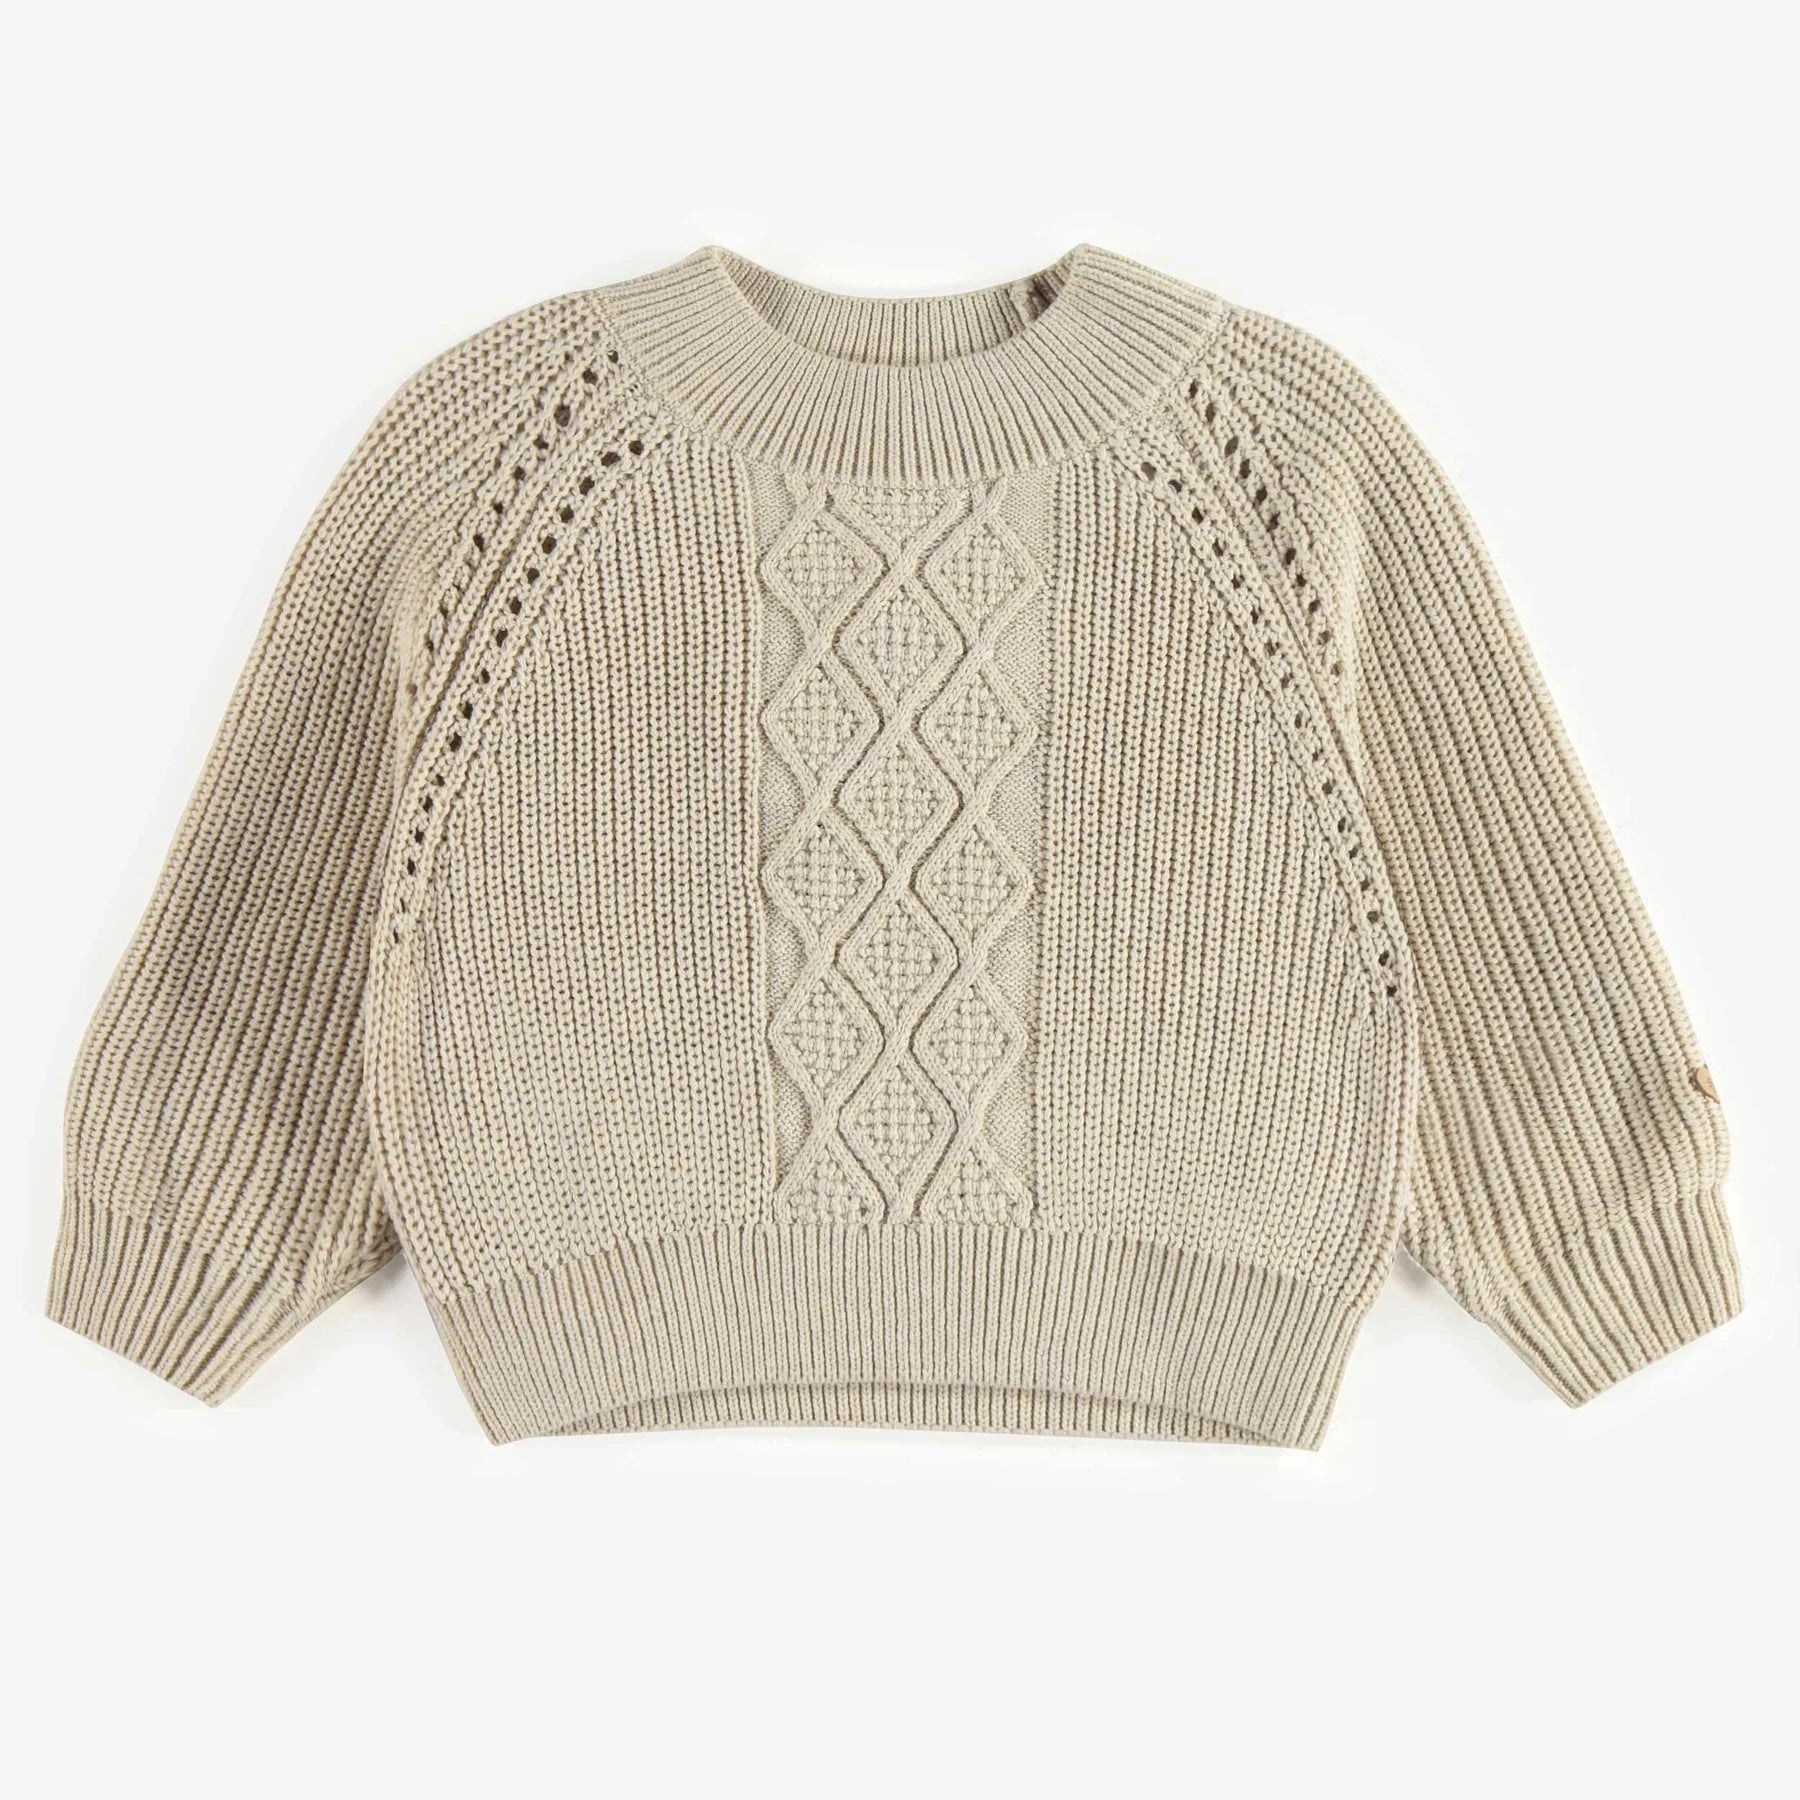 Knitted Sweater - Wren Harper